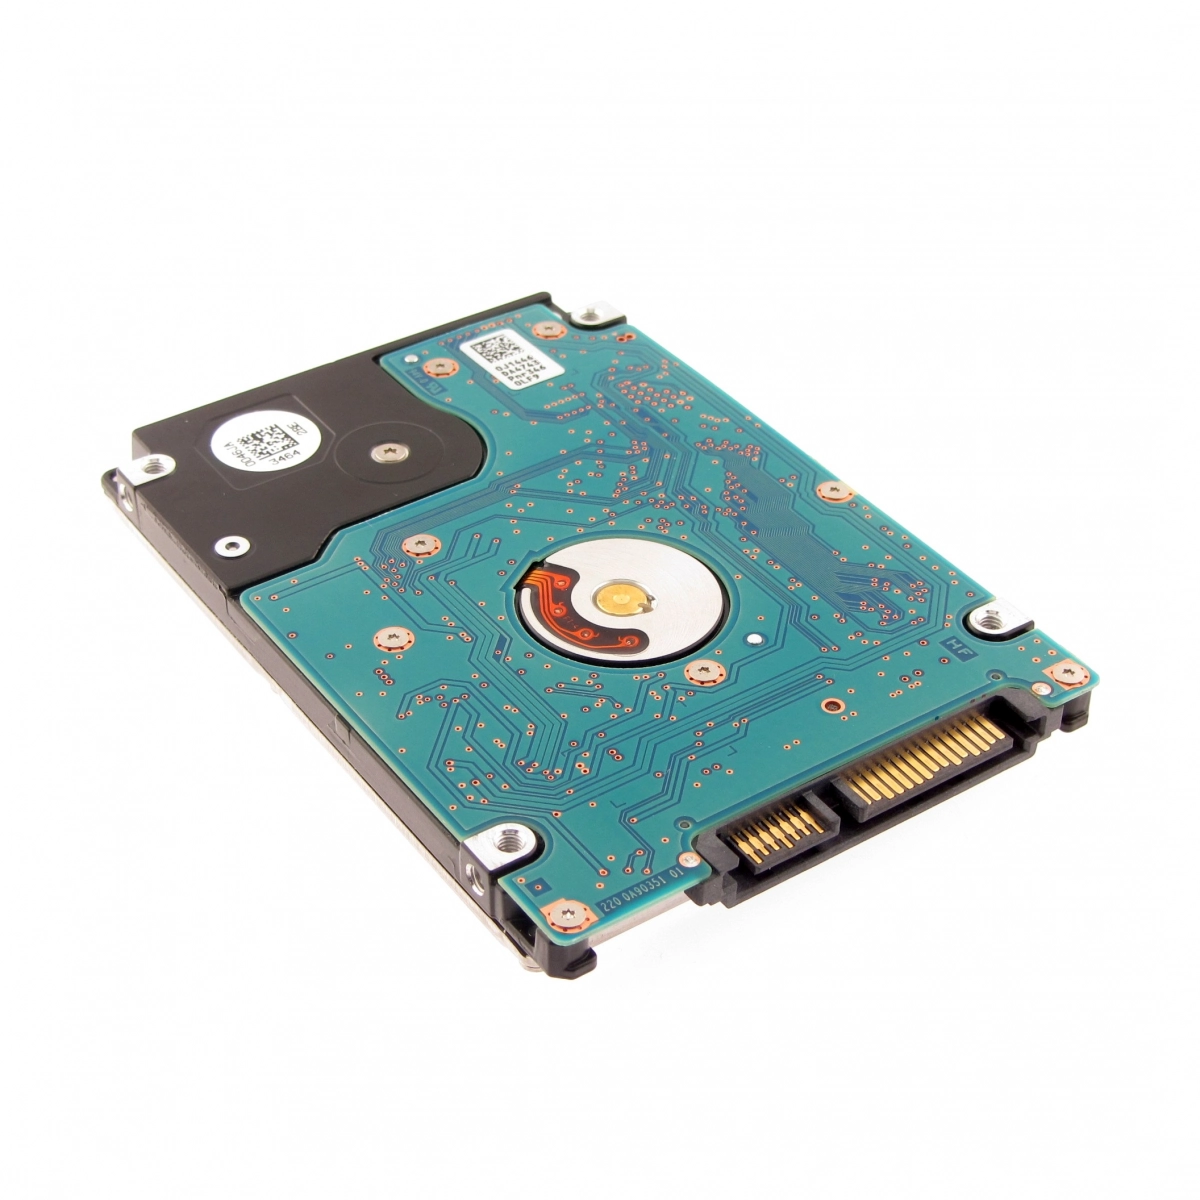 Notebook-Festplatte 500GB, 5400rpm, 16MB für HP Pavilion dv7-1208